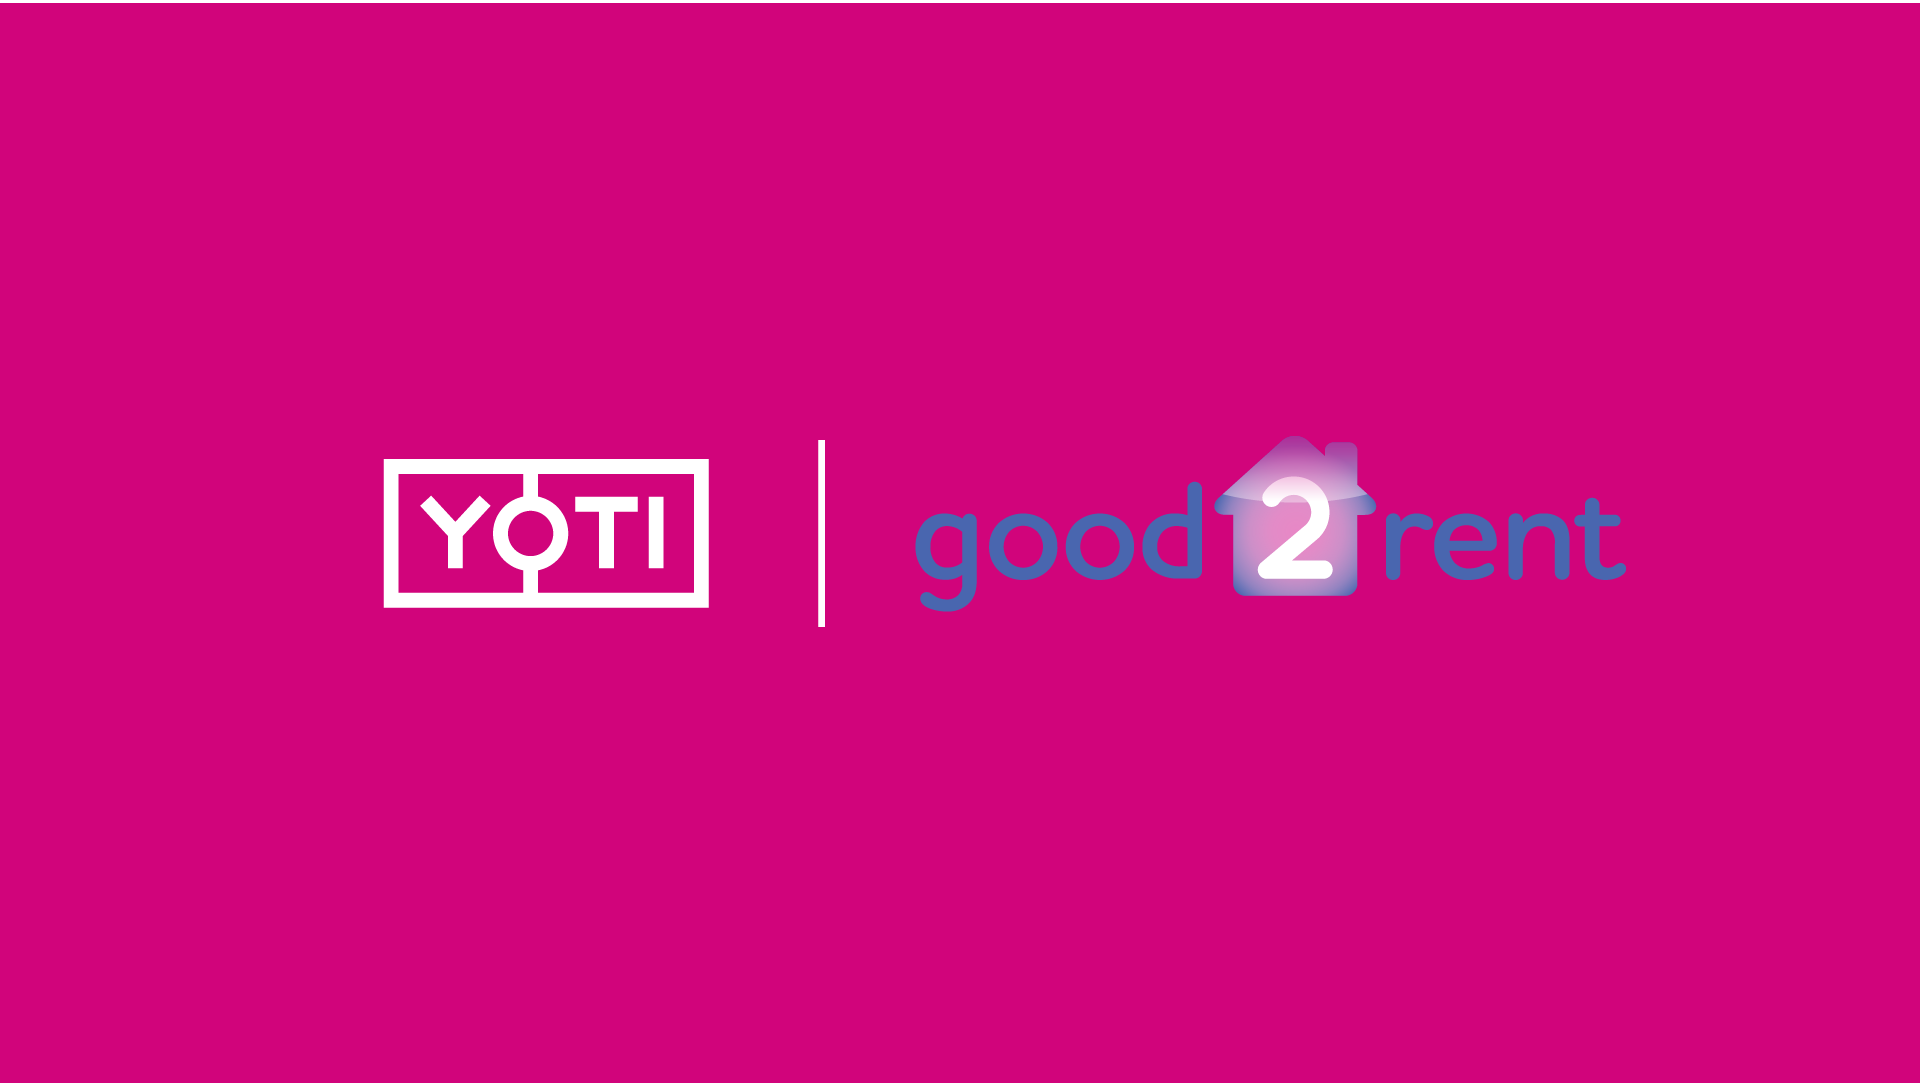 Yoti partners with good2rent